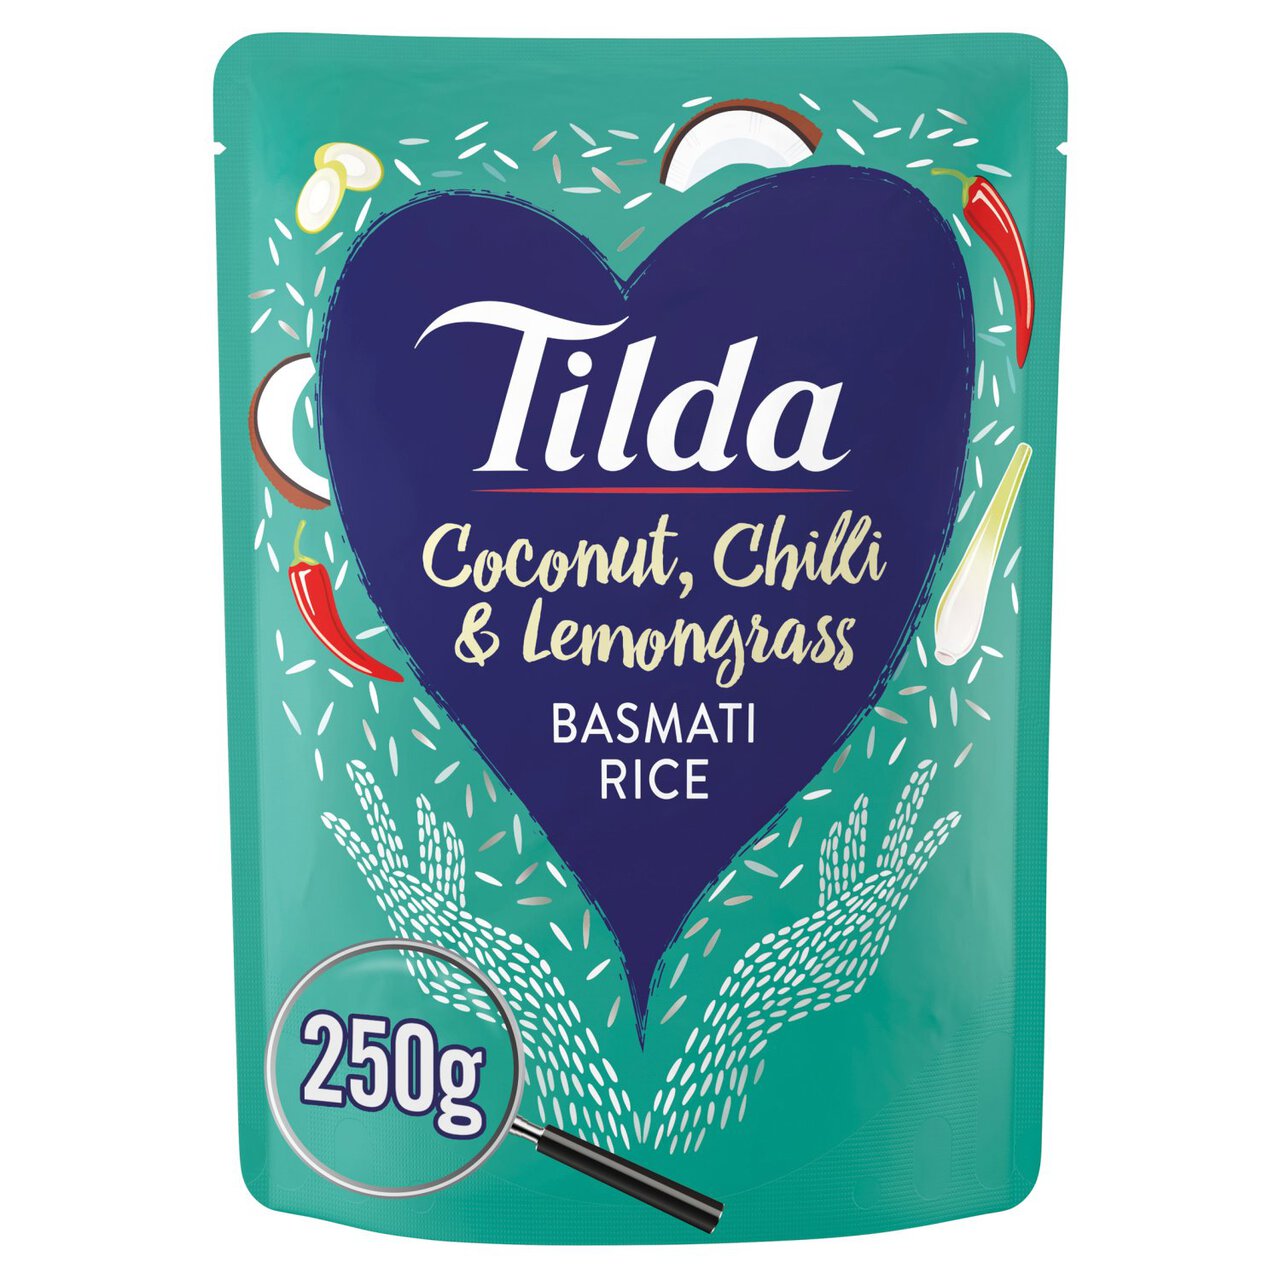 Tilda Microwave Coconut Chilli & Lemongrass Basmati Rice 250g